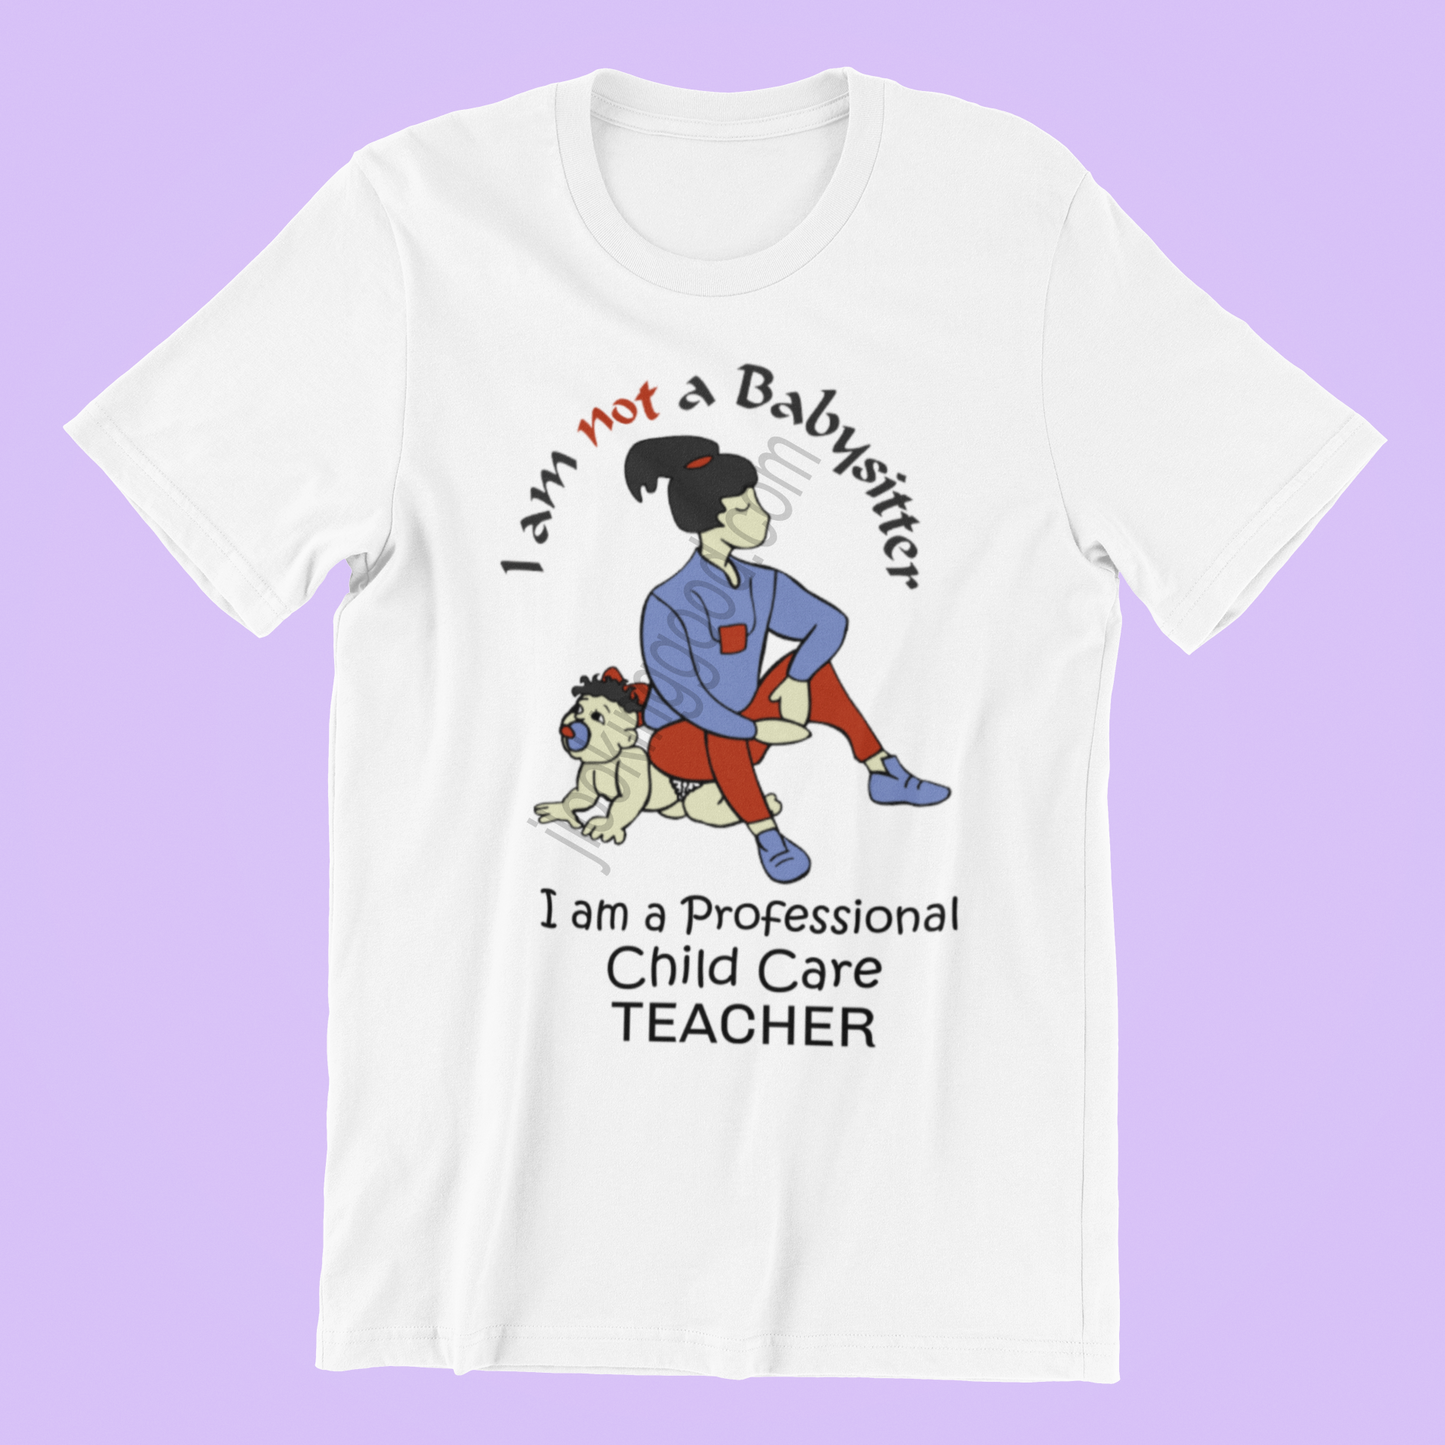 I am not a Babysitter, I am a Professional Child Care Teacher